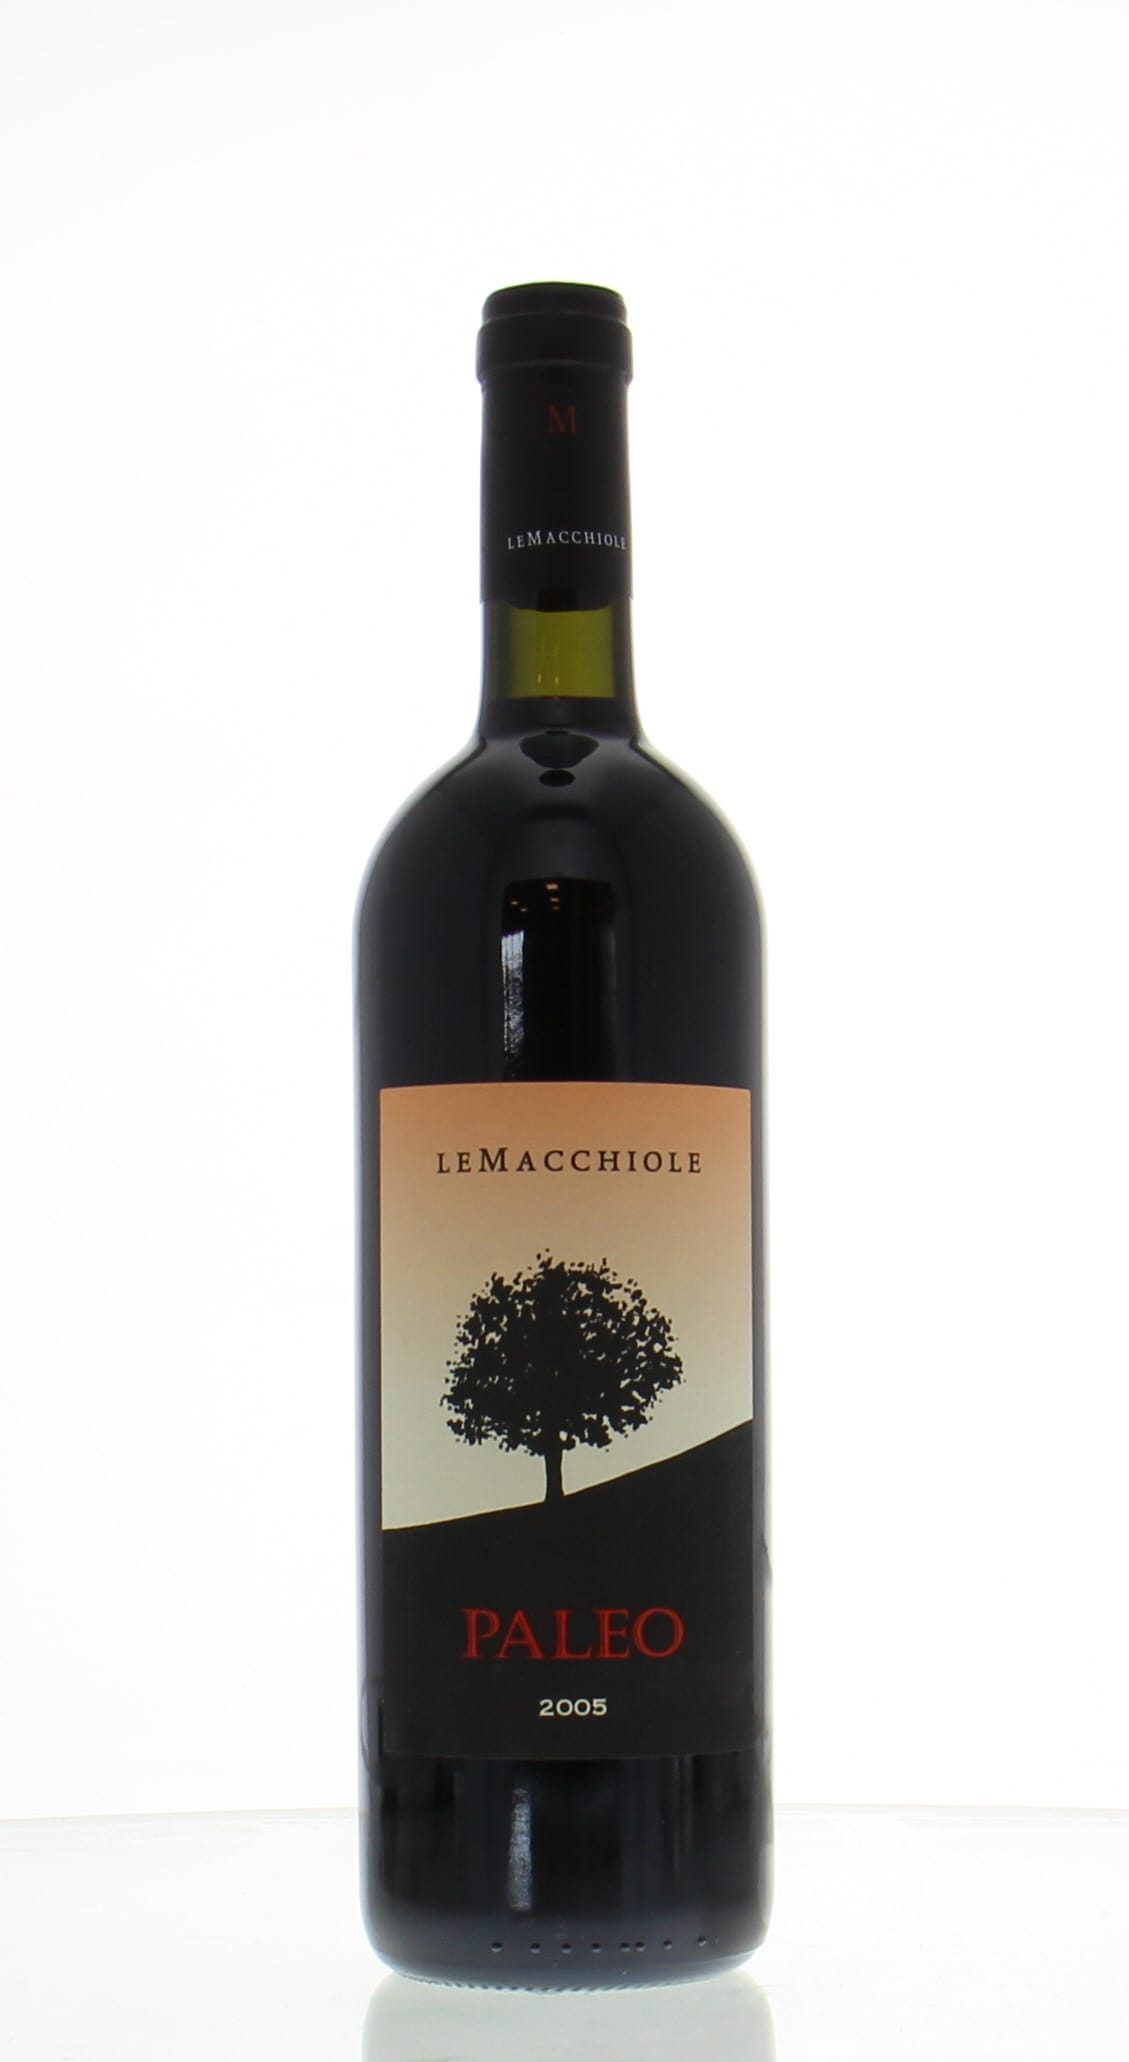 Le Macchiole - Paleo Rosso 2005 From Original Wooden Case